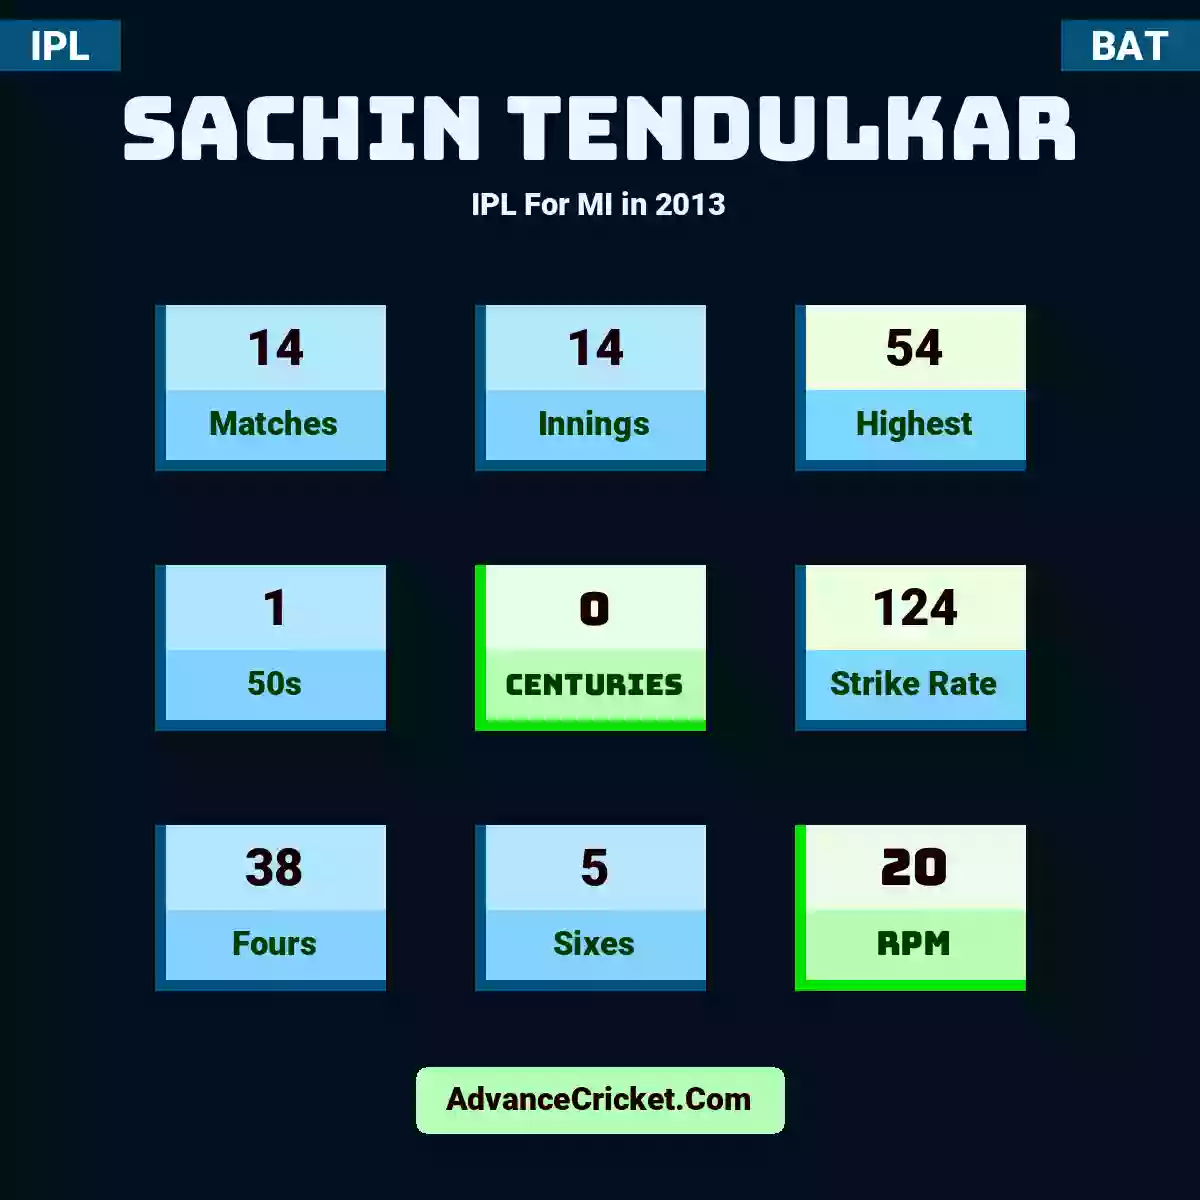 Sachin Tendulkar IPL  For MI in 2013, Sachin Tendulkar played 14 matches, scored 54 runs as highest, 1 half-centuries, and 0 centuries, with a strike rate of 124. S.Tendulkar hit 38 fours and 5 sixes, with an RPM of 20.